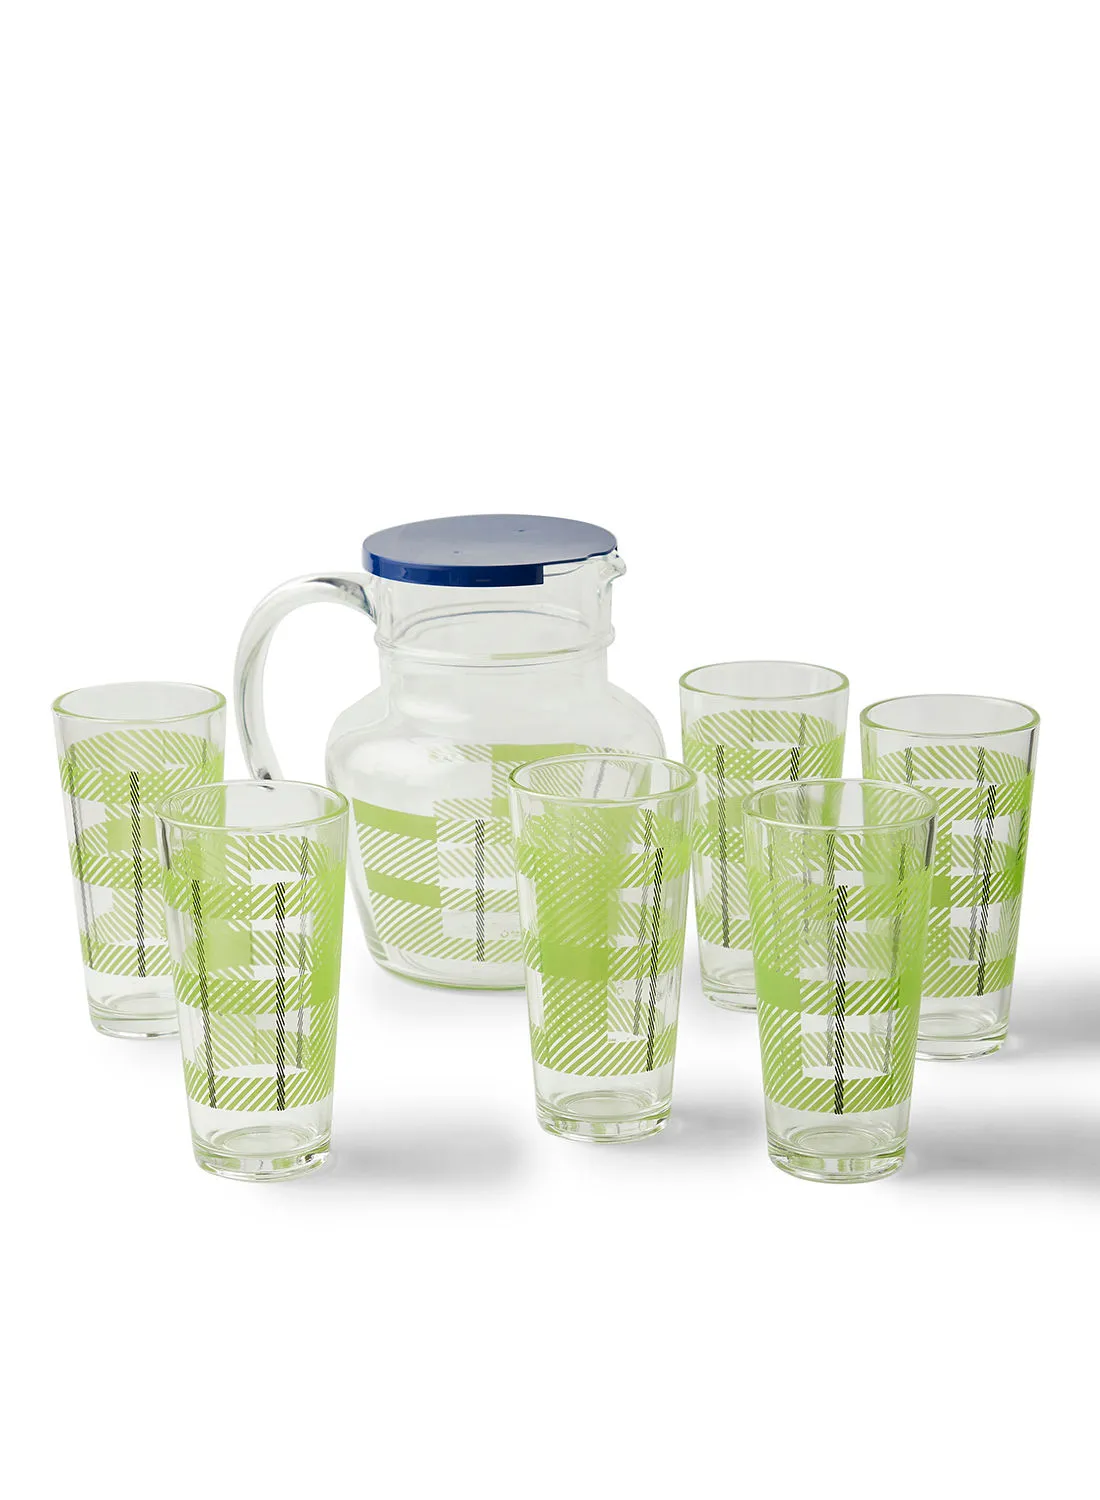 noon east 7 Piece Glass Drink Set Beverage Glasses For Juices - By Noon East - Jug 1.4 L, Tumblers 27 Cl - Serves 6 - Celticgreen